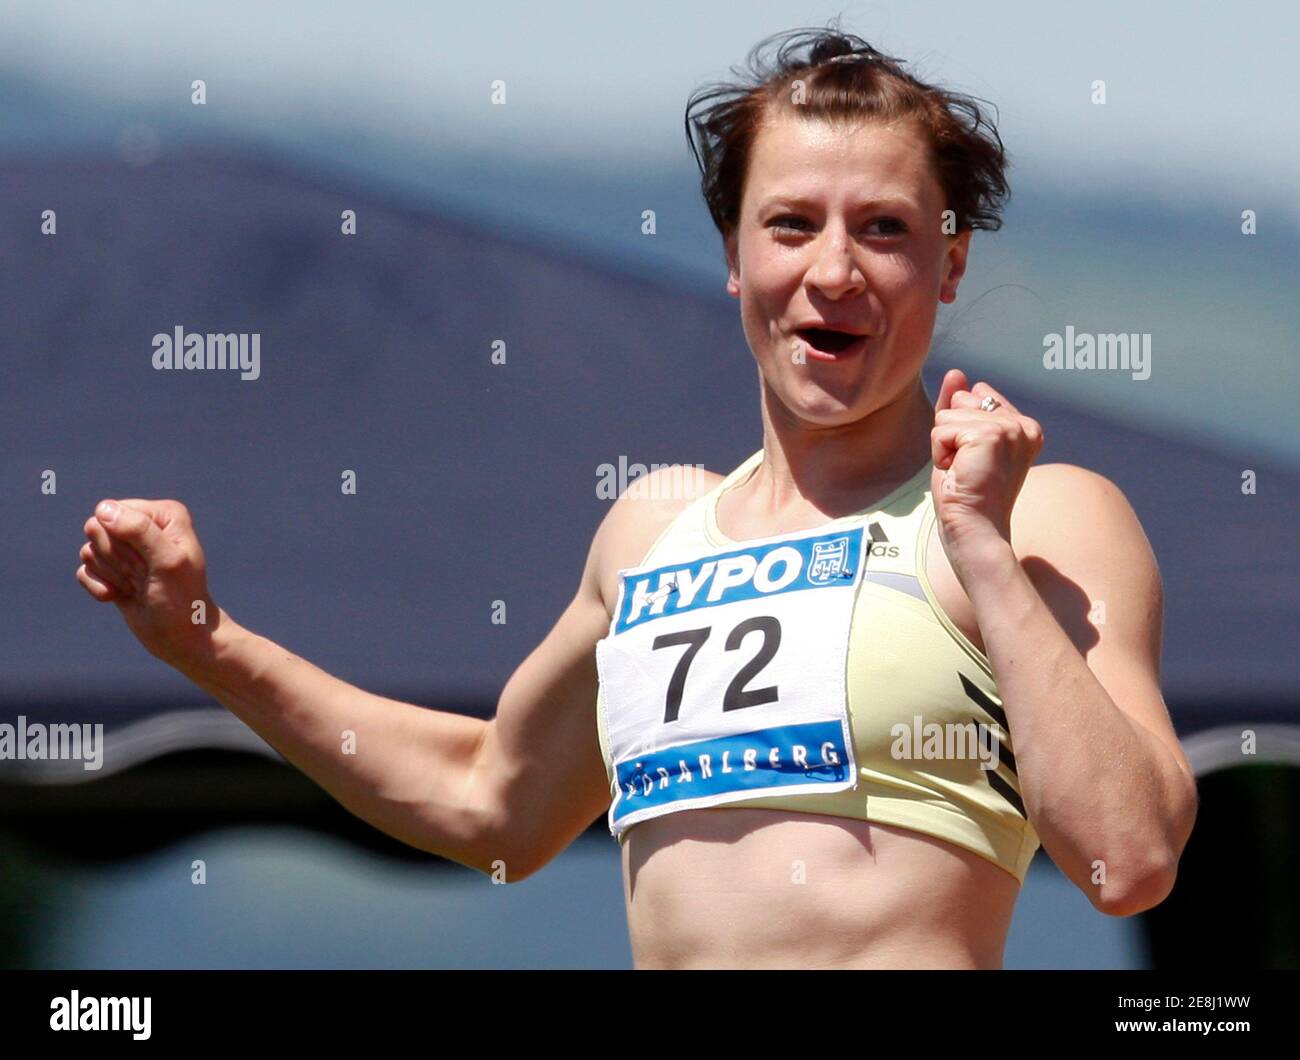 Ukraine's Lyudmyla Yosypenko reacts during the high jump event at the two-day international heptathlon meeting in Goetzis, May 30, 2009. REUTERS/Miro Kuzmanovic (AUSTRIA SPORT ATHLETICS) Stock Photo